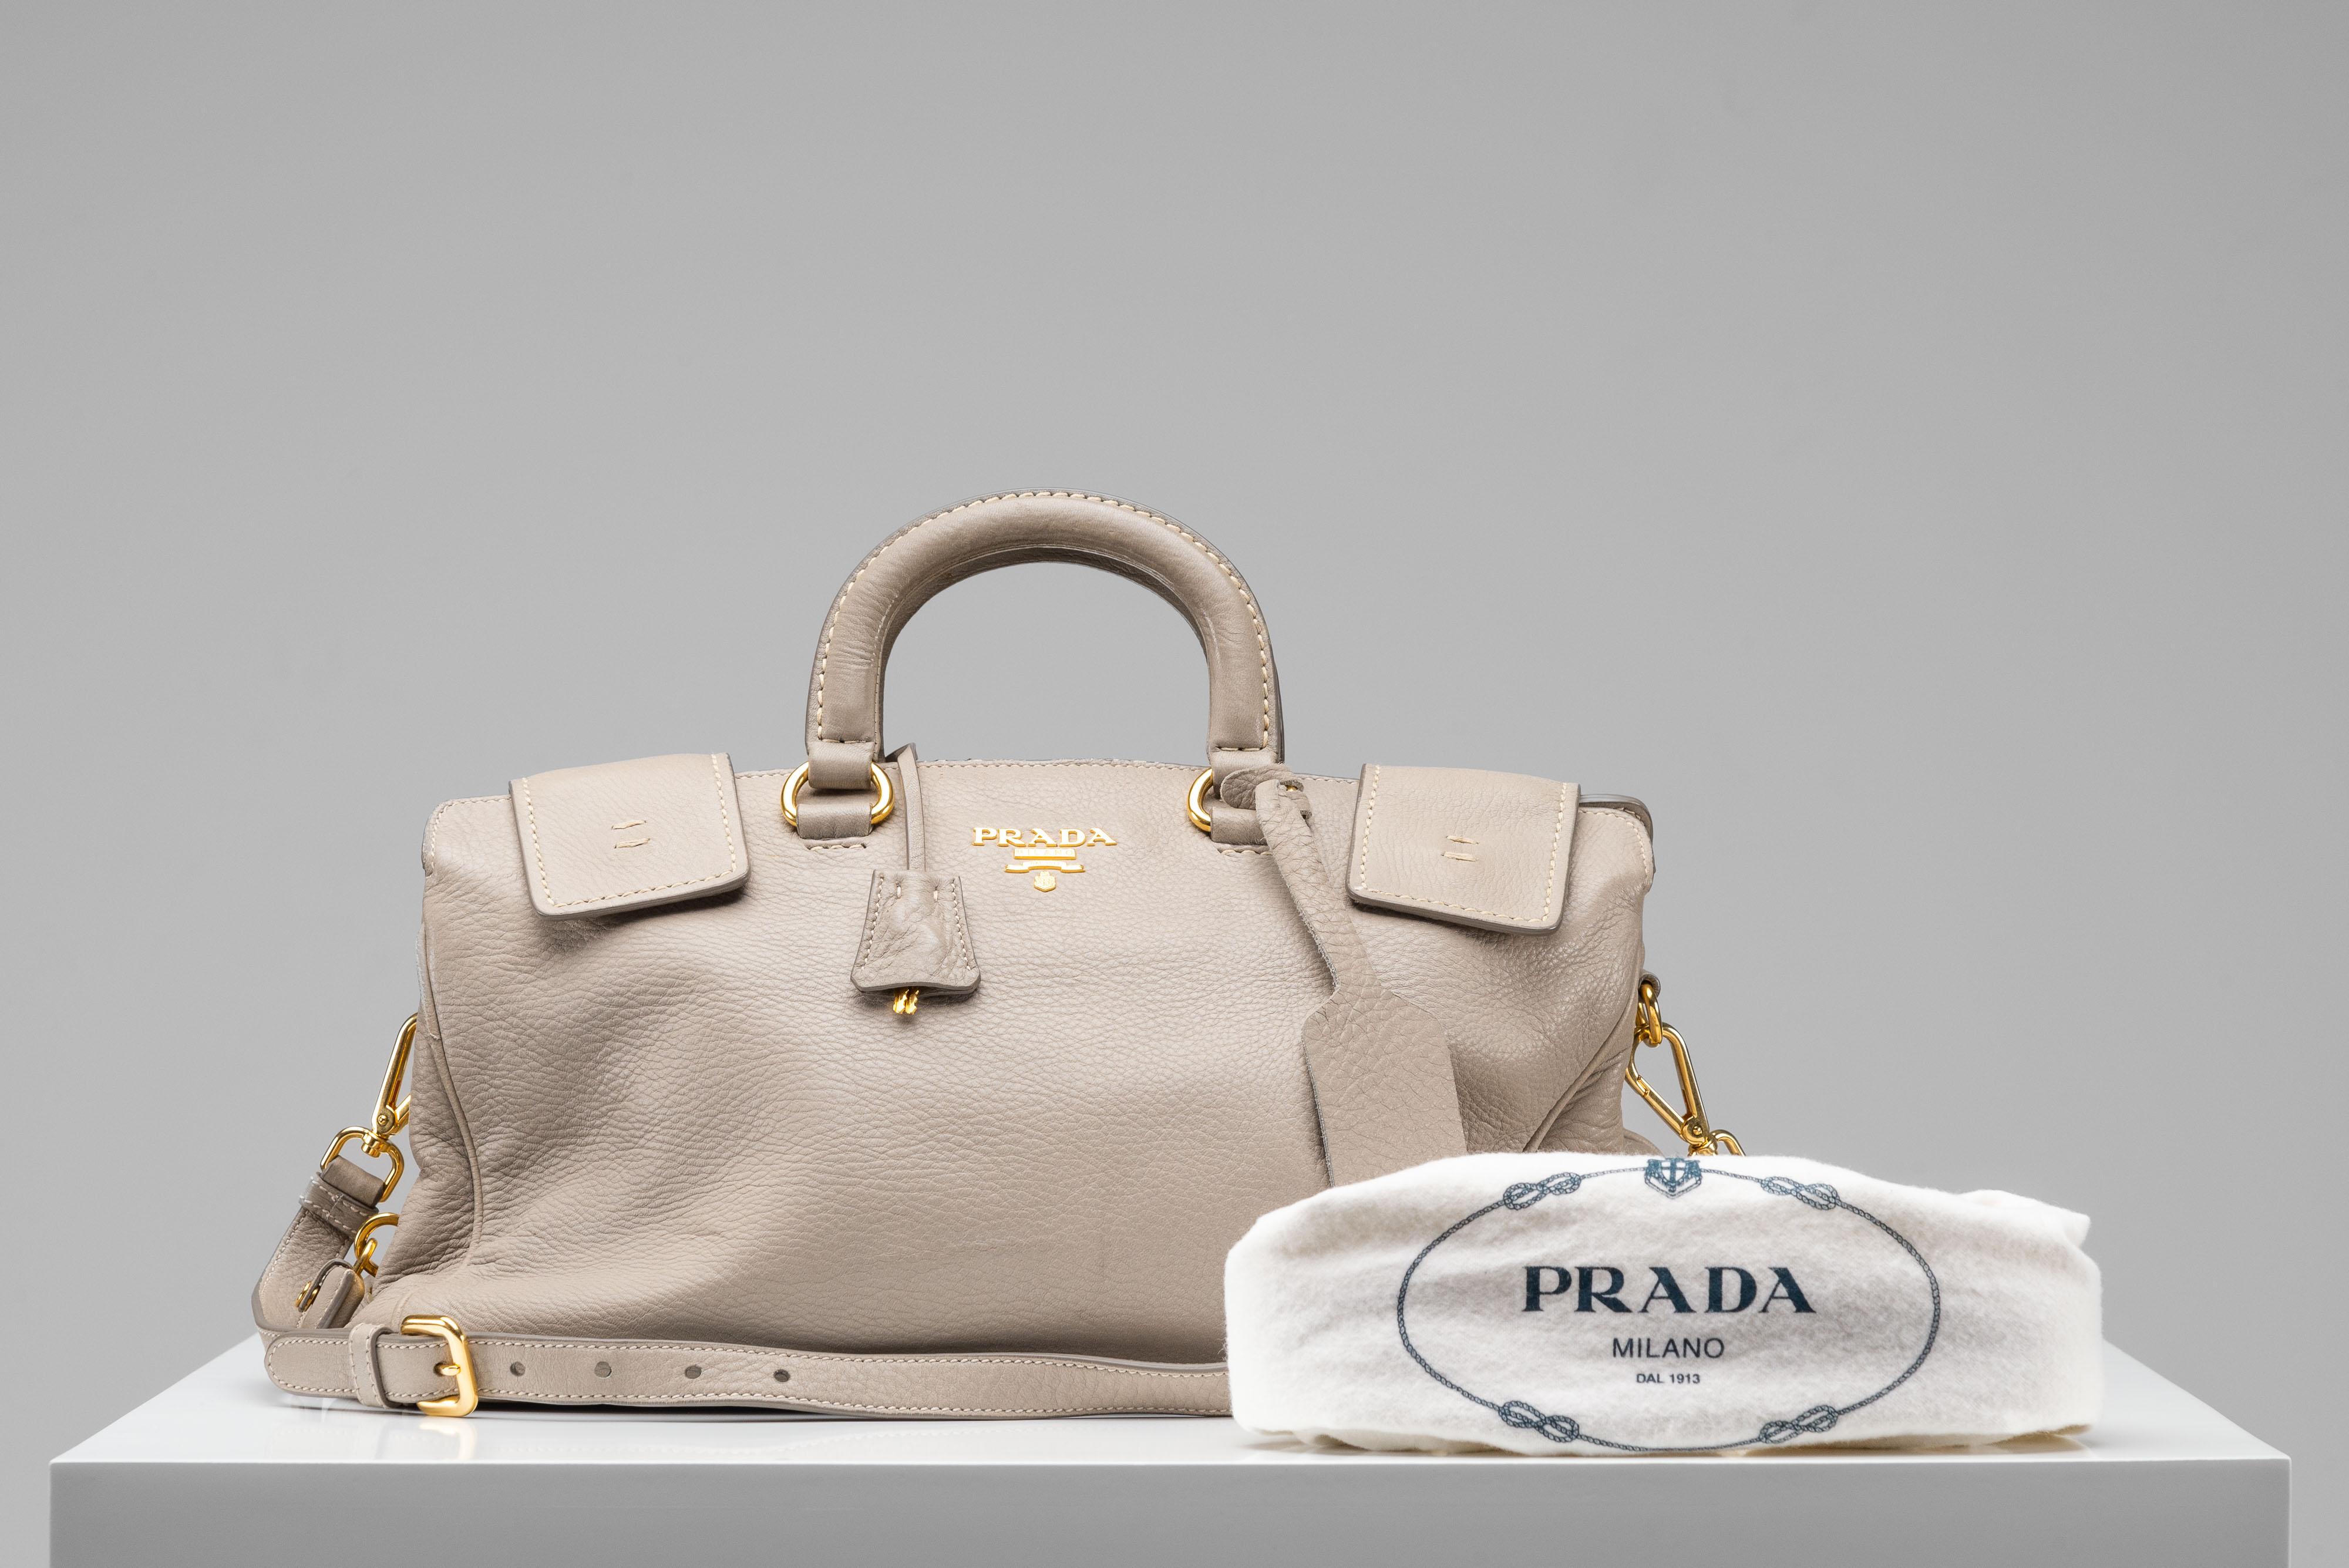 From the collection of SAVINETI we offer this Prada Cervo Handbag:
-    Brand: Prada
-    Model: Cervo Handbag
-    Color: light grey
-    Condition: Very Good Condition
-    Materials: leather, gold-color hardware
-    Extras: Dustbag

Authenticity